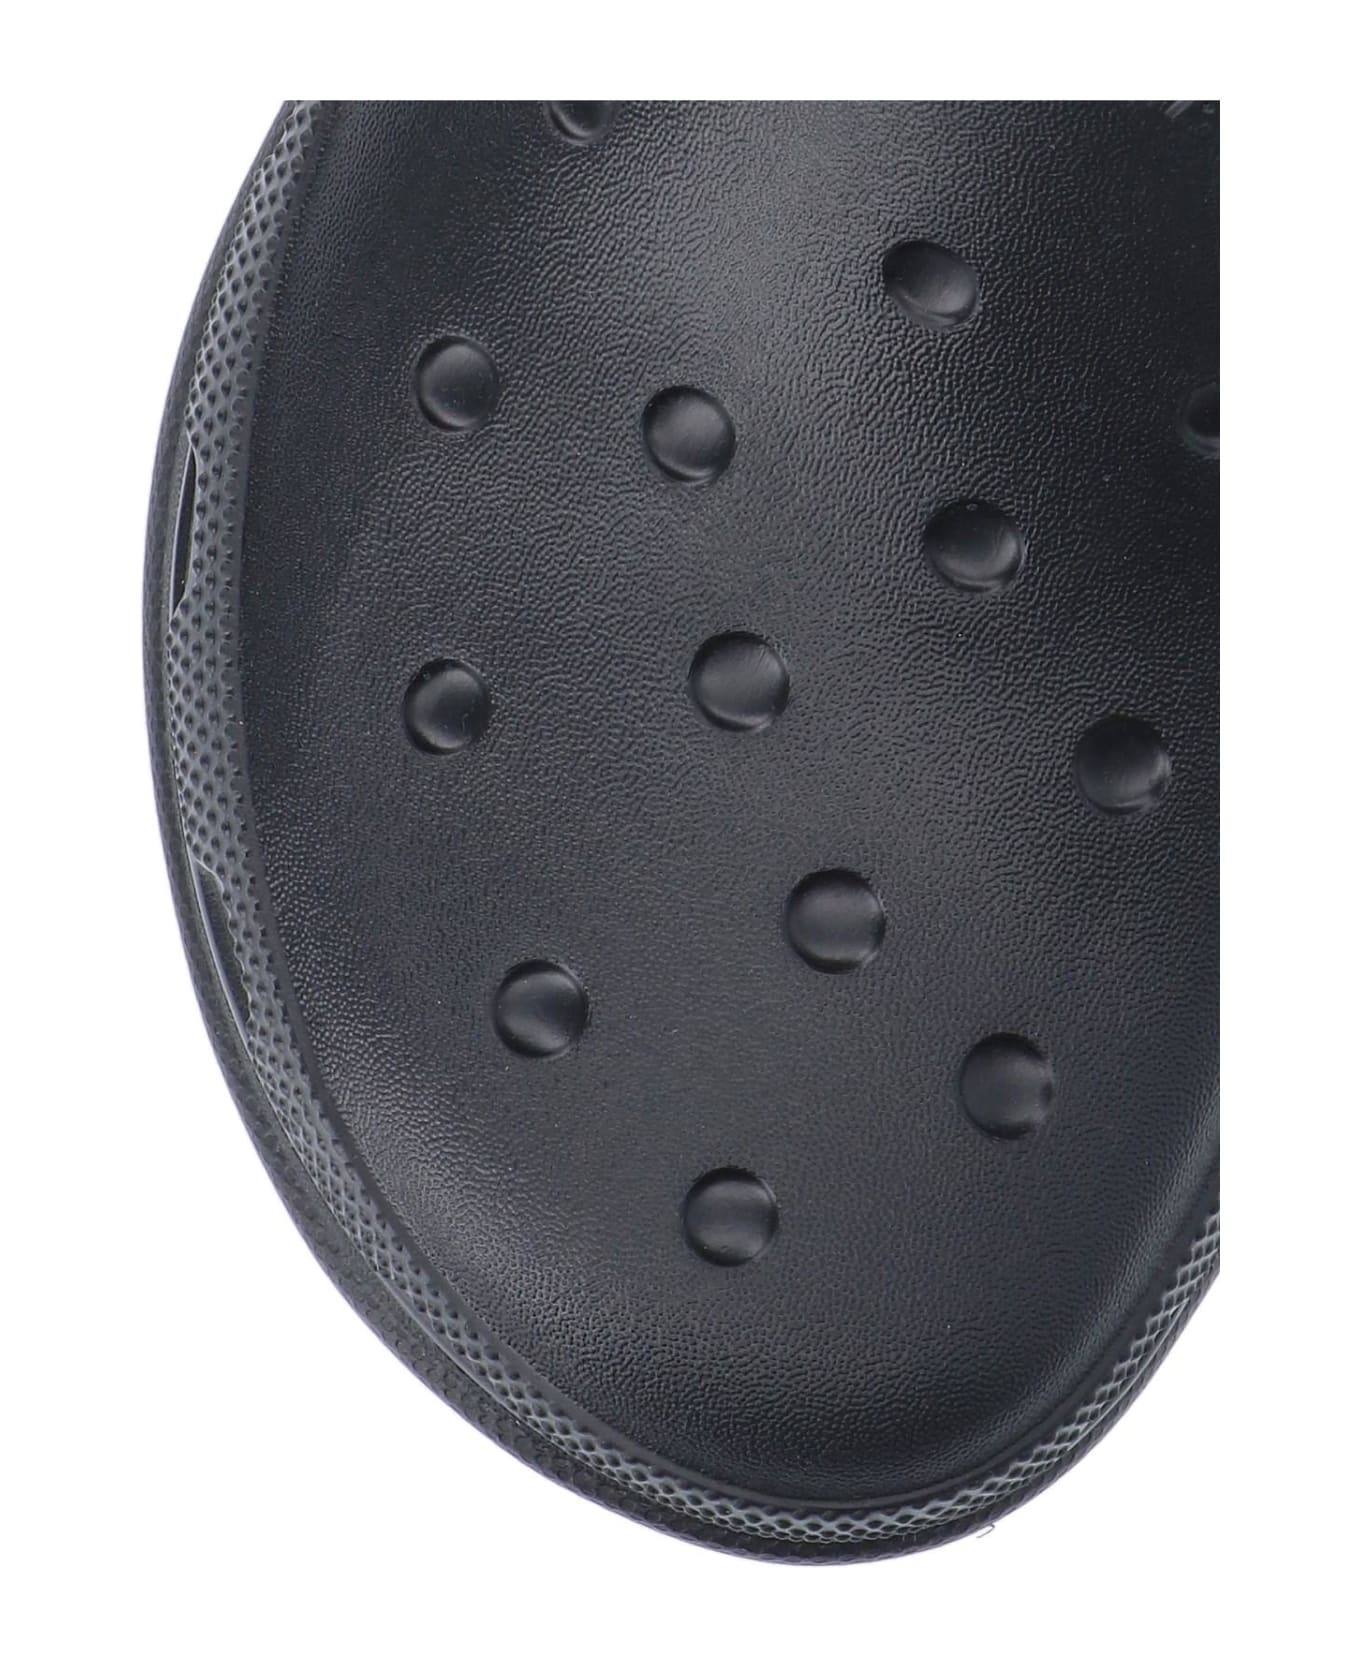 Balenciaga X Crocs Mules Slip-on - Black その他各種シューズ